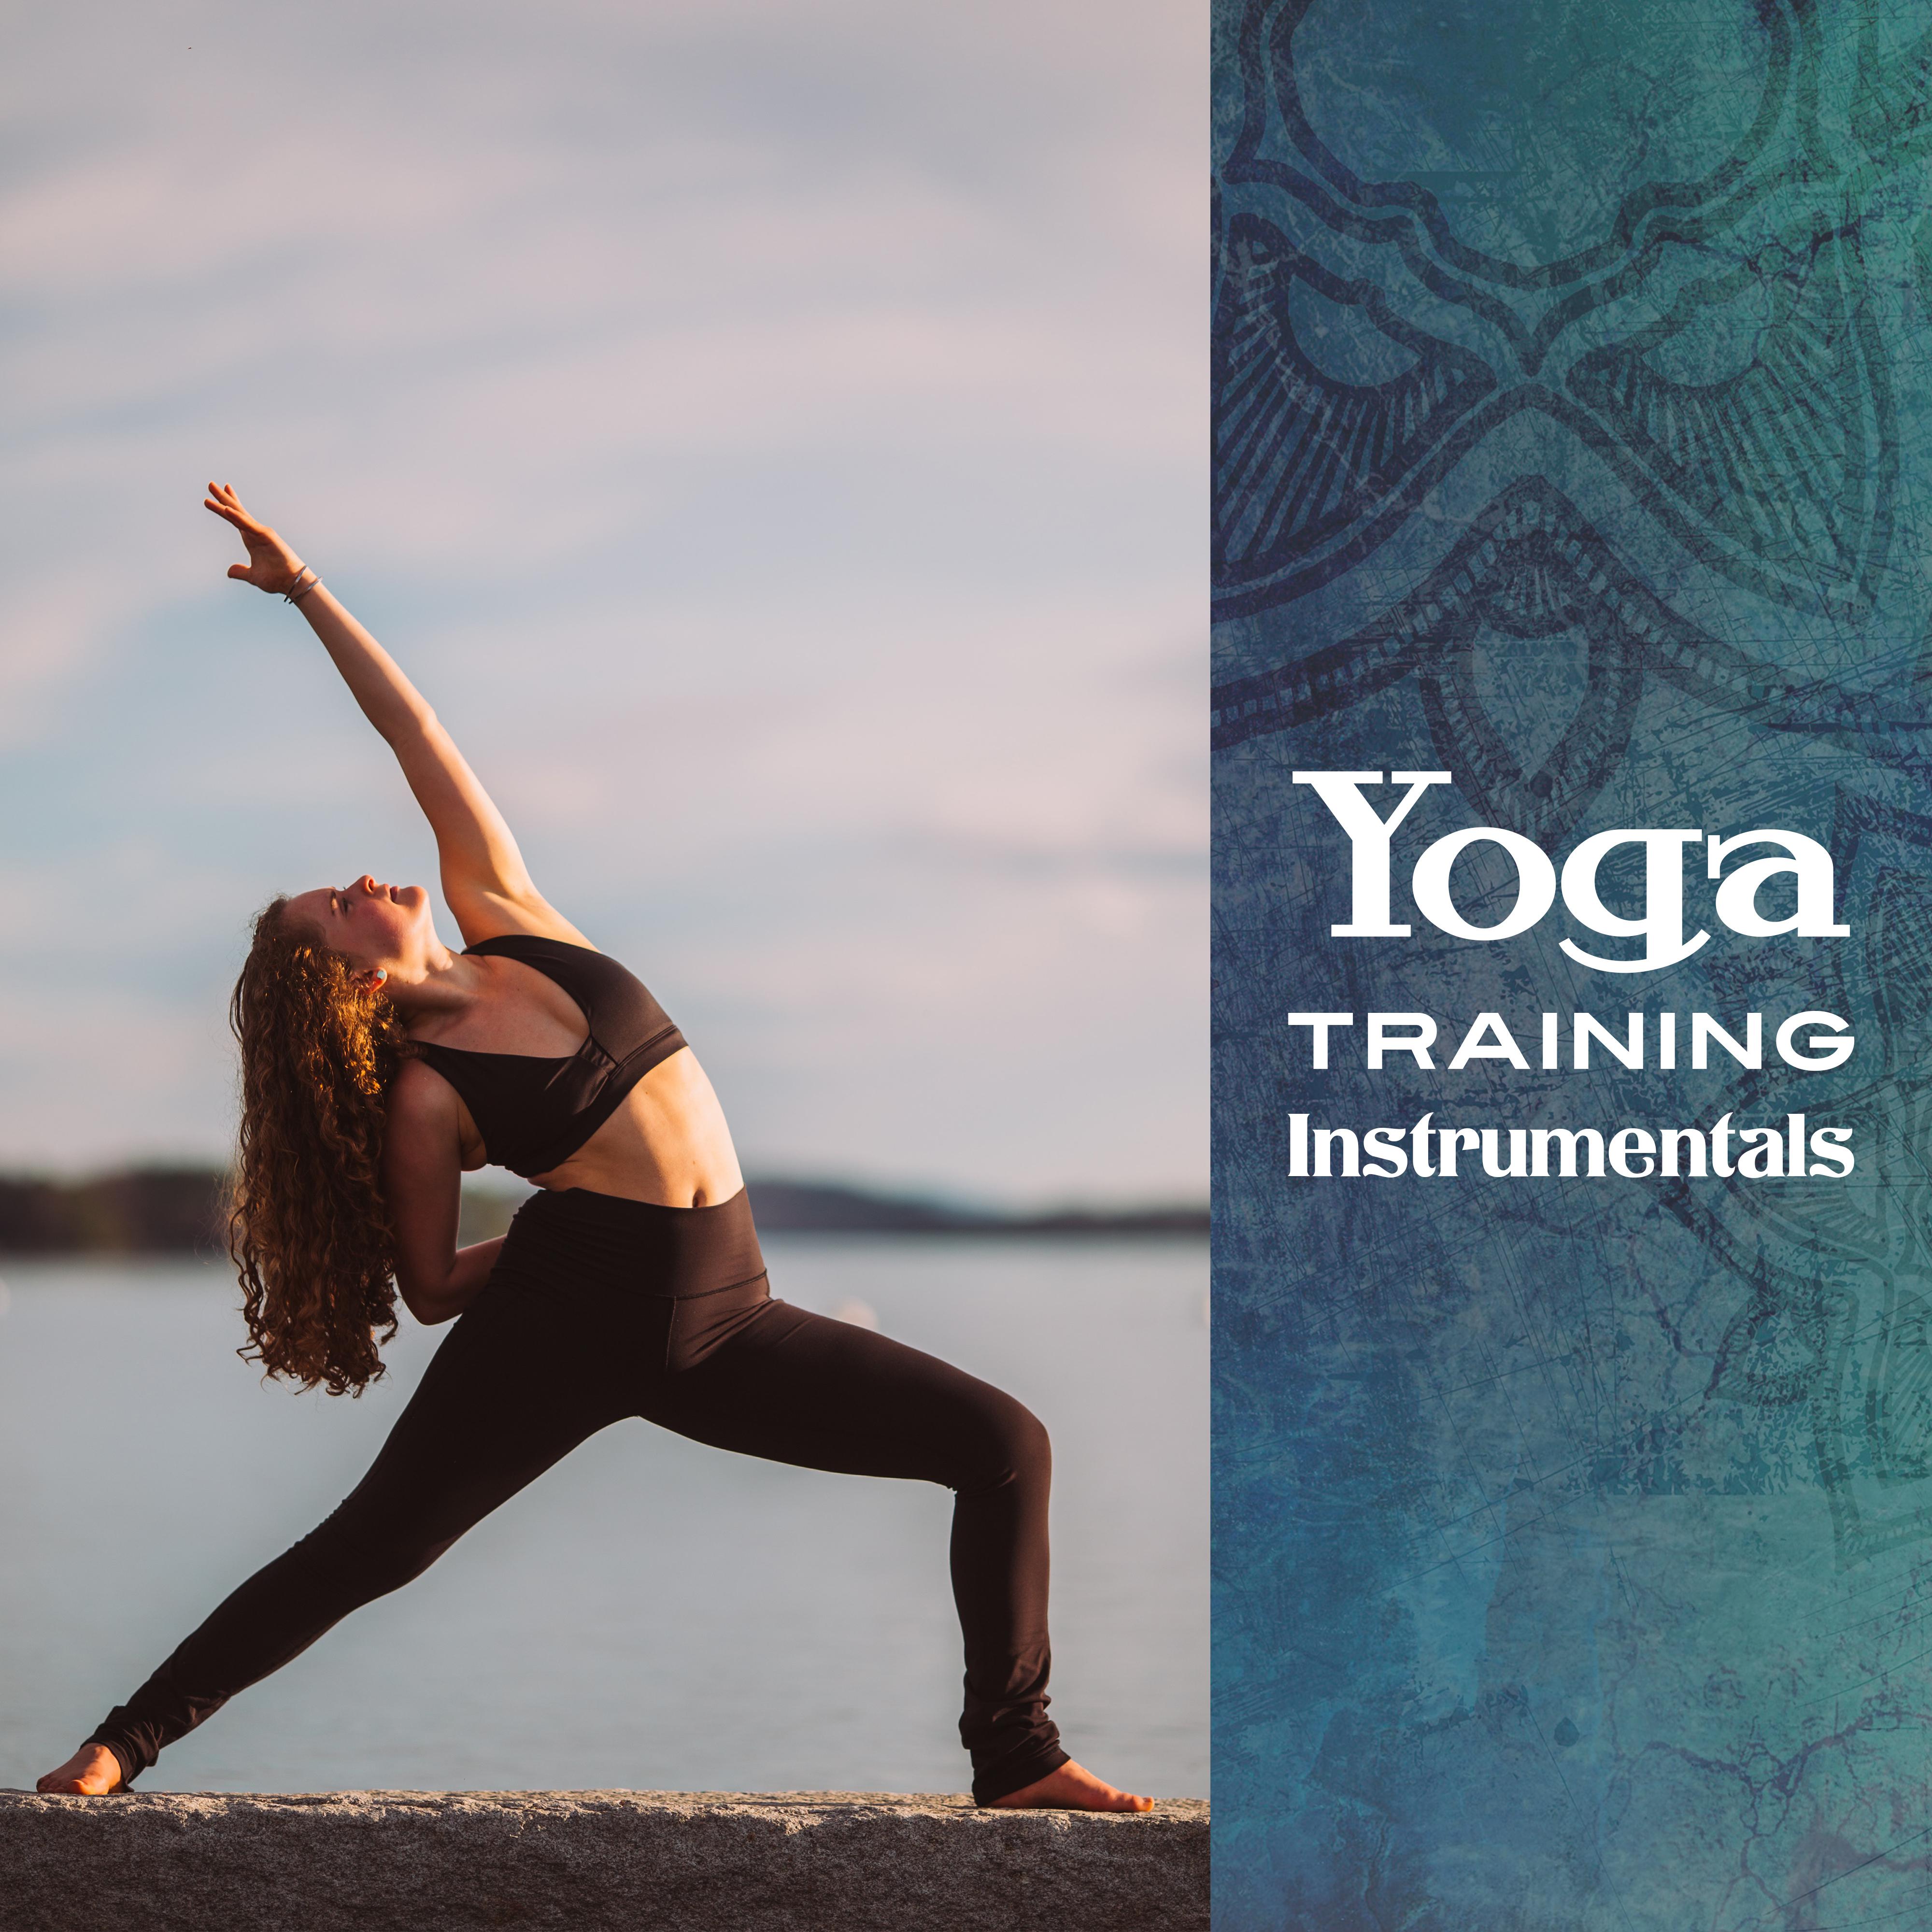 Yoga Training Instrumentals